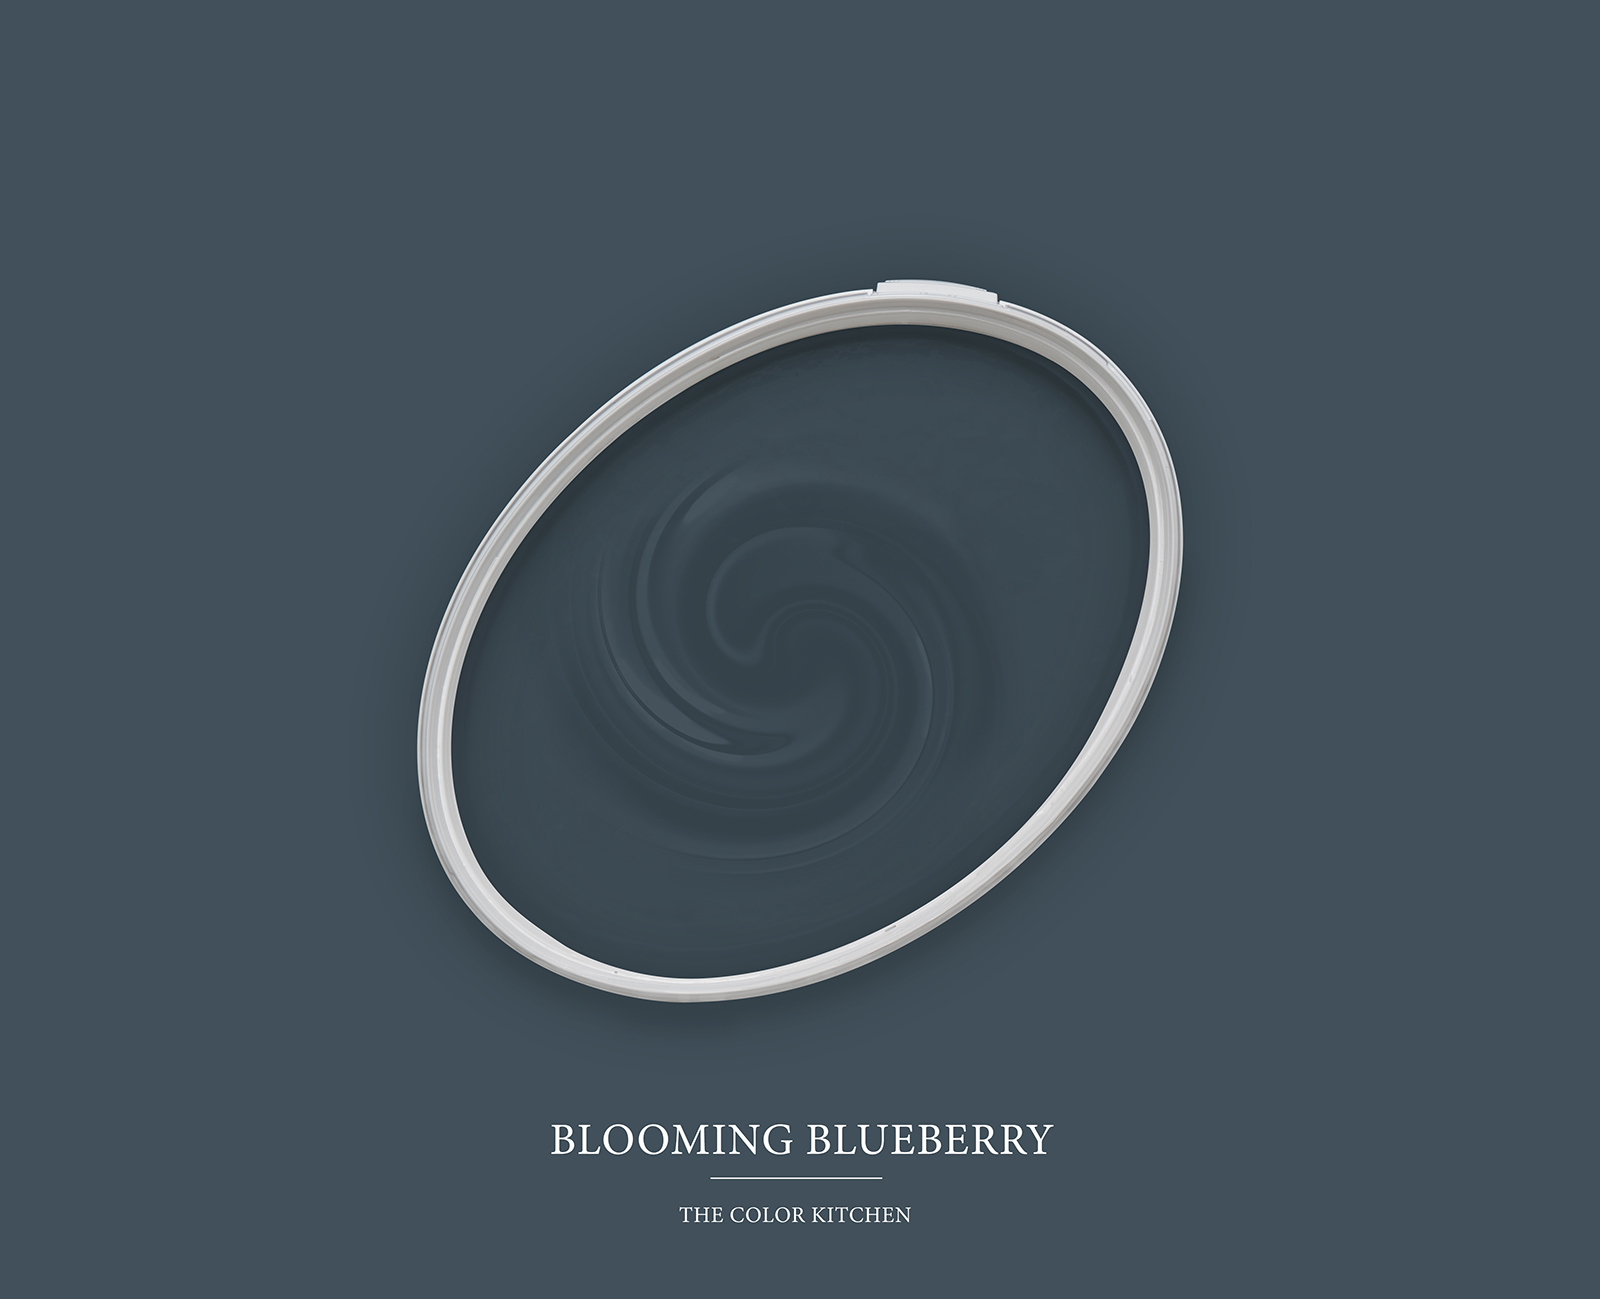         Wandfarbe TCK3013 »Blooming Blueberry« in prachtvollem Dunkelblau – 2,5 Liter
    